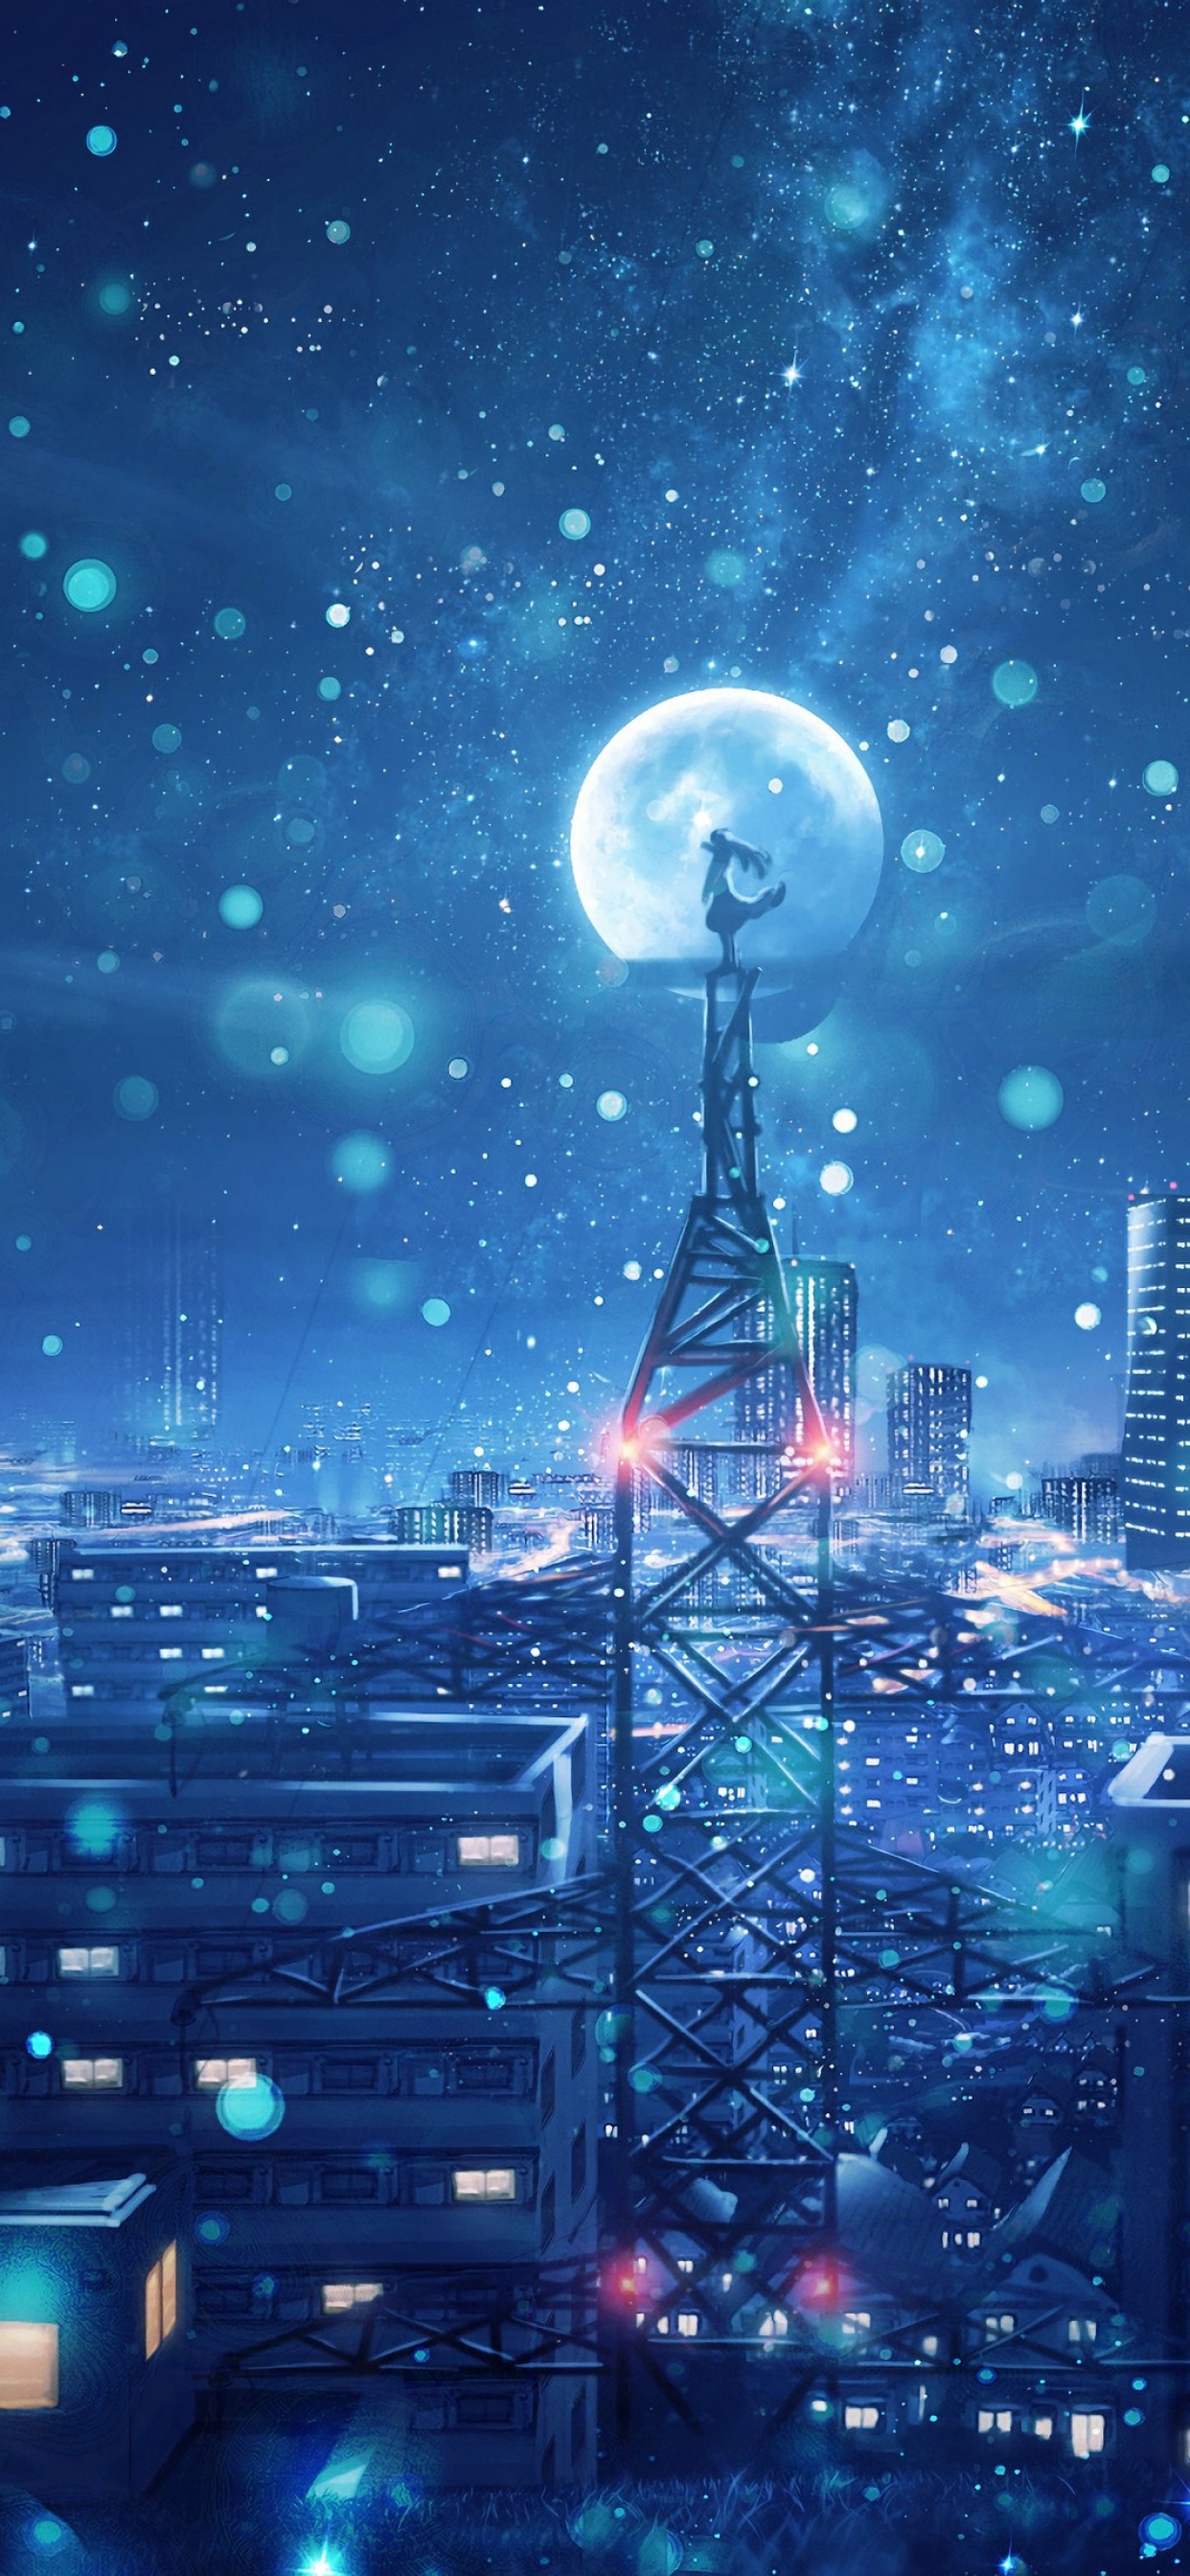 Dream 4K Wallpaper, Blue, Cityscape, Snowfall, Moon, Cold